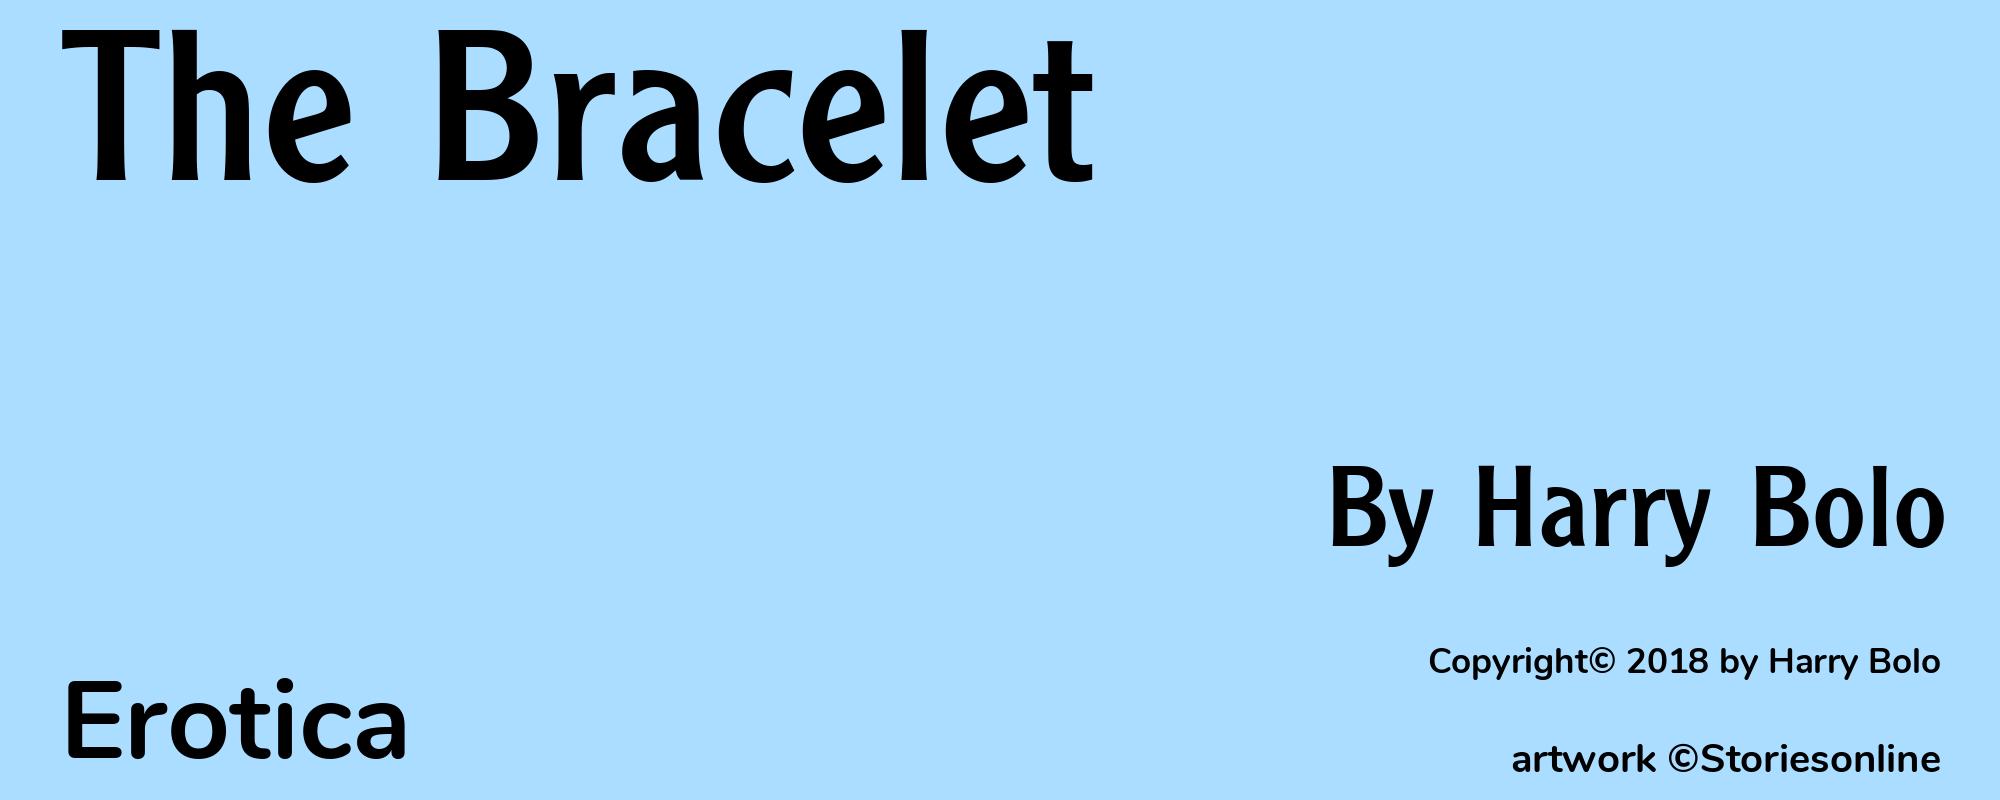 The Bracelet - Cover